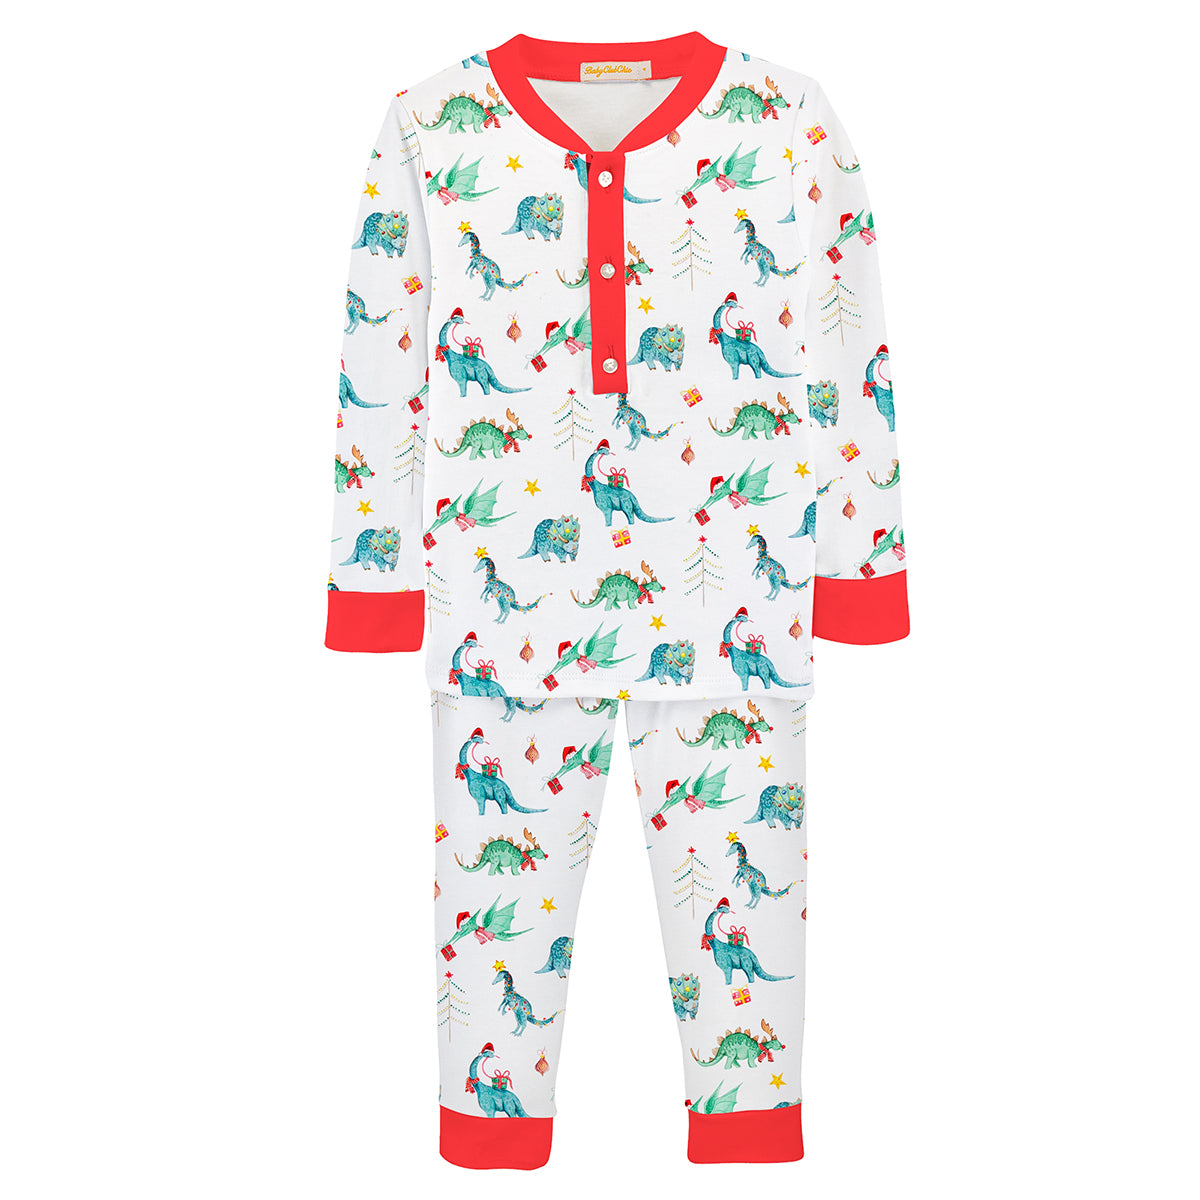 Jurassic Dinosaur Print Boy's Christmas Pajamas by Baby Club Chic